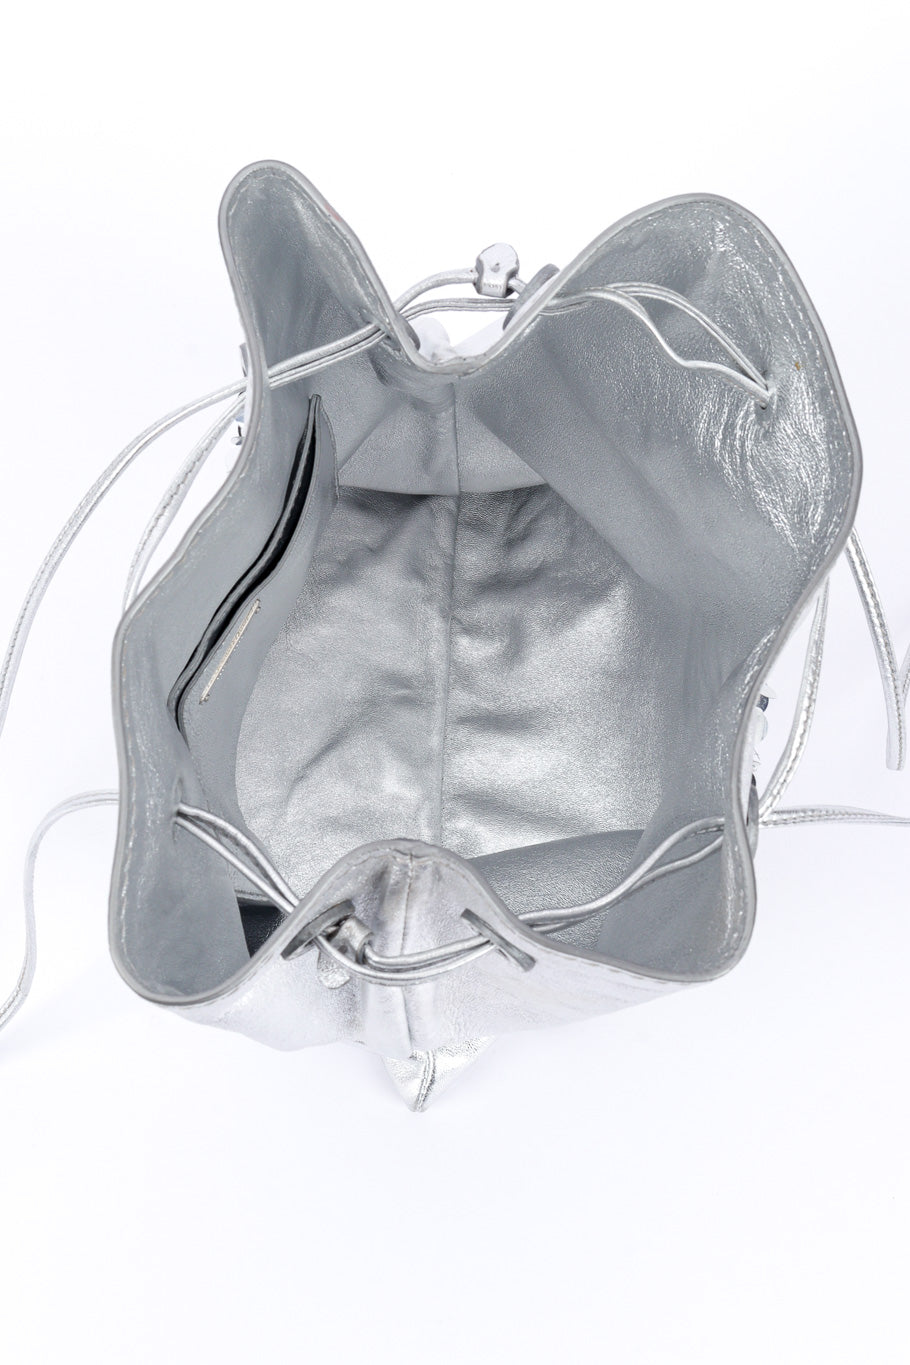 Miu Miu Metallic Drawstring Bag open bag inner view on white backdrop @Recessla